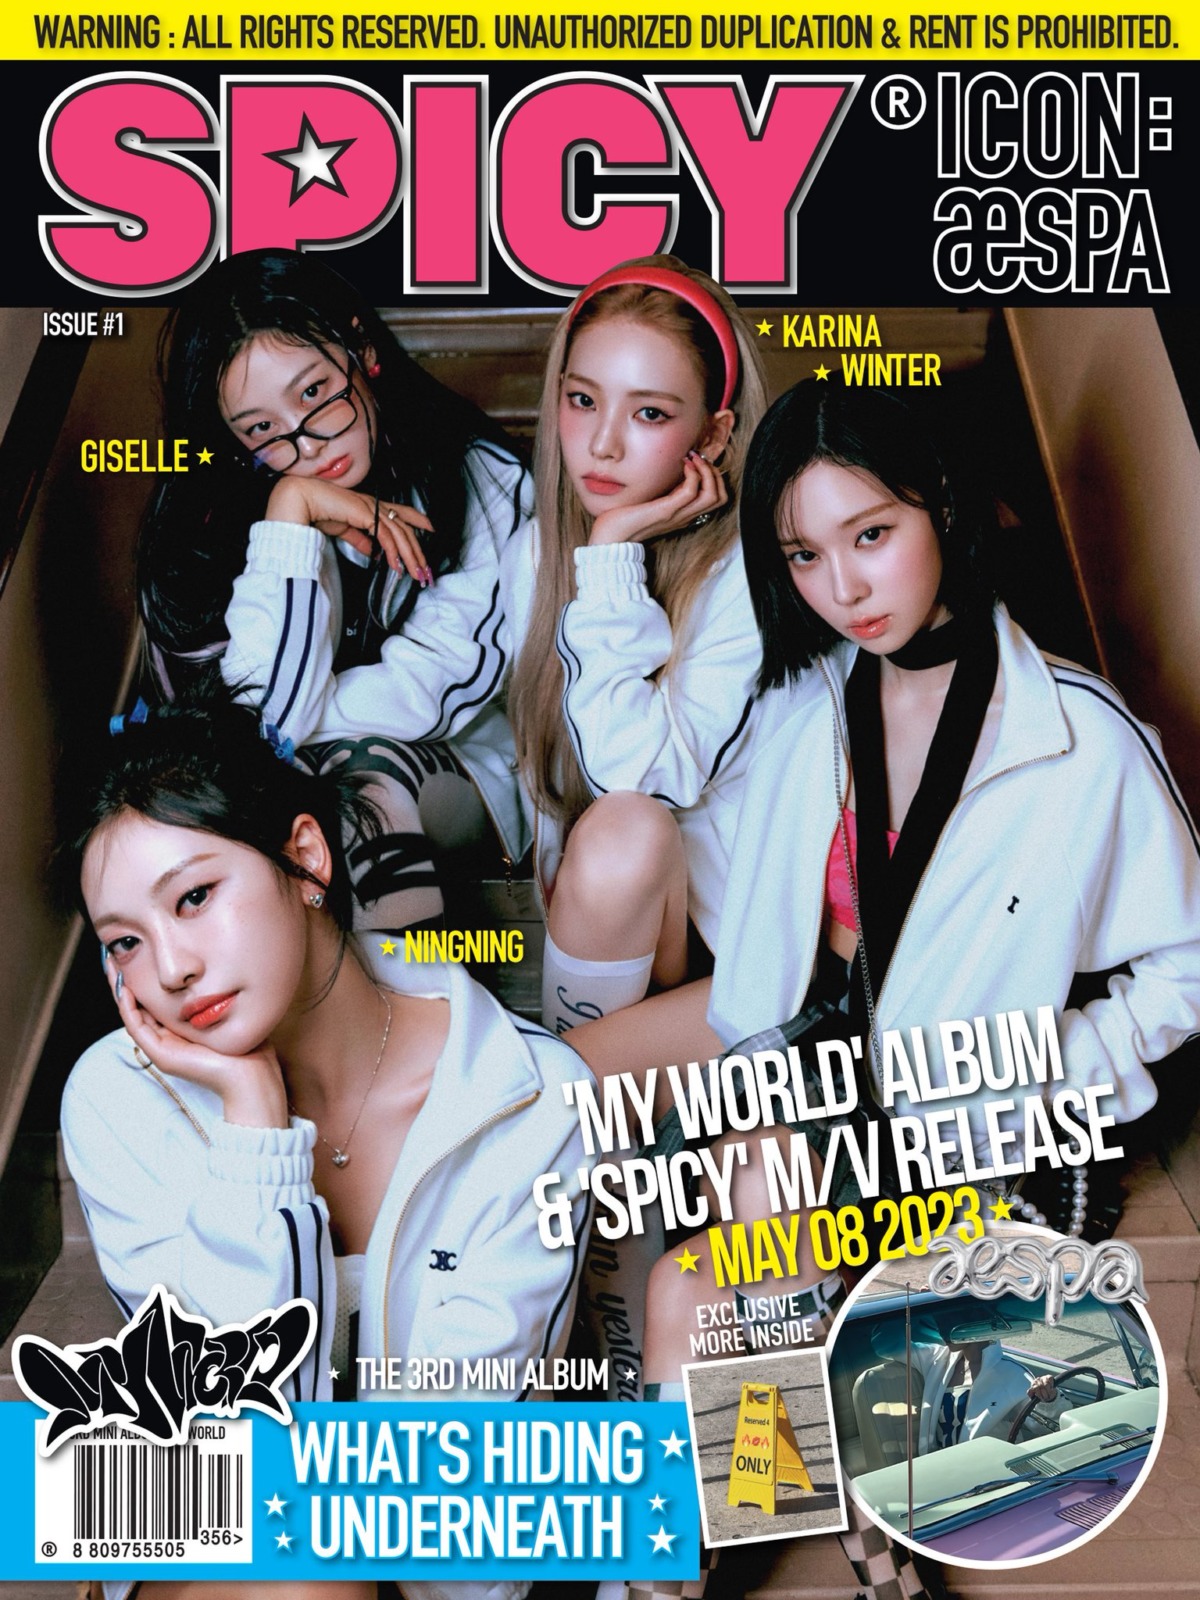 aespa 3rd Mini Album 「MY WORLD」
aespa 「Spicy」
KARINA (カリナ)
WINTER (ウィンター)
NINGNING (ニンニン)
GISELLE (ジゼル)